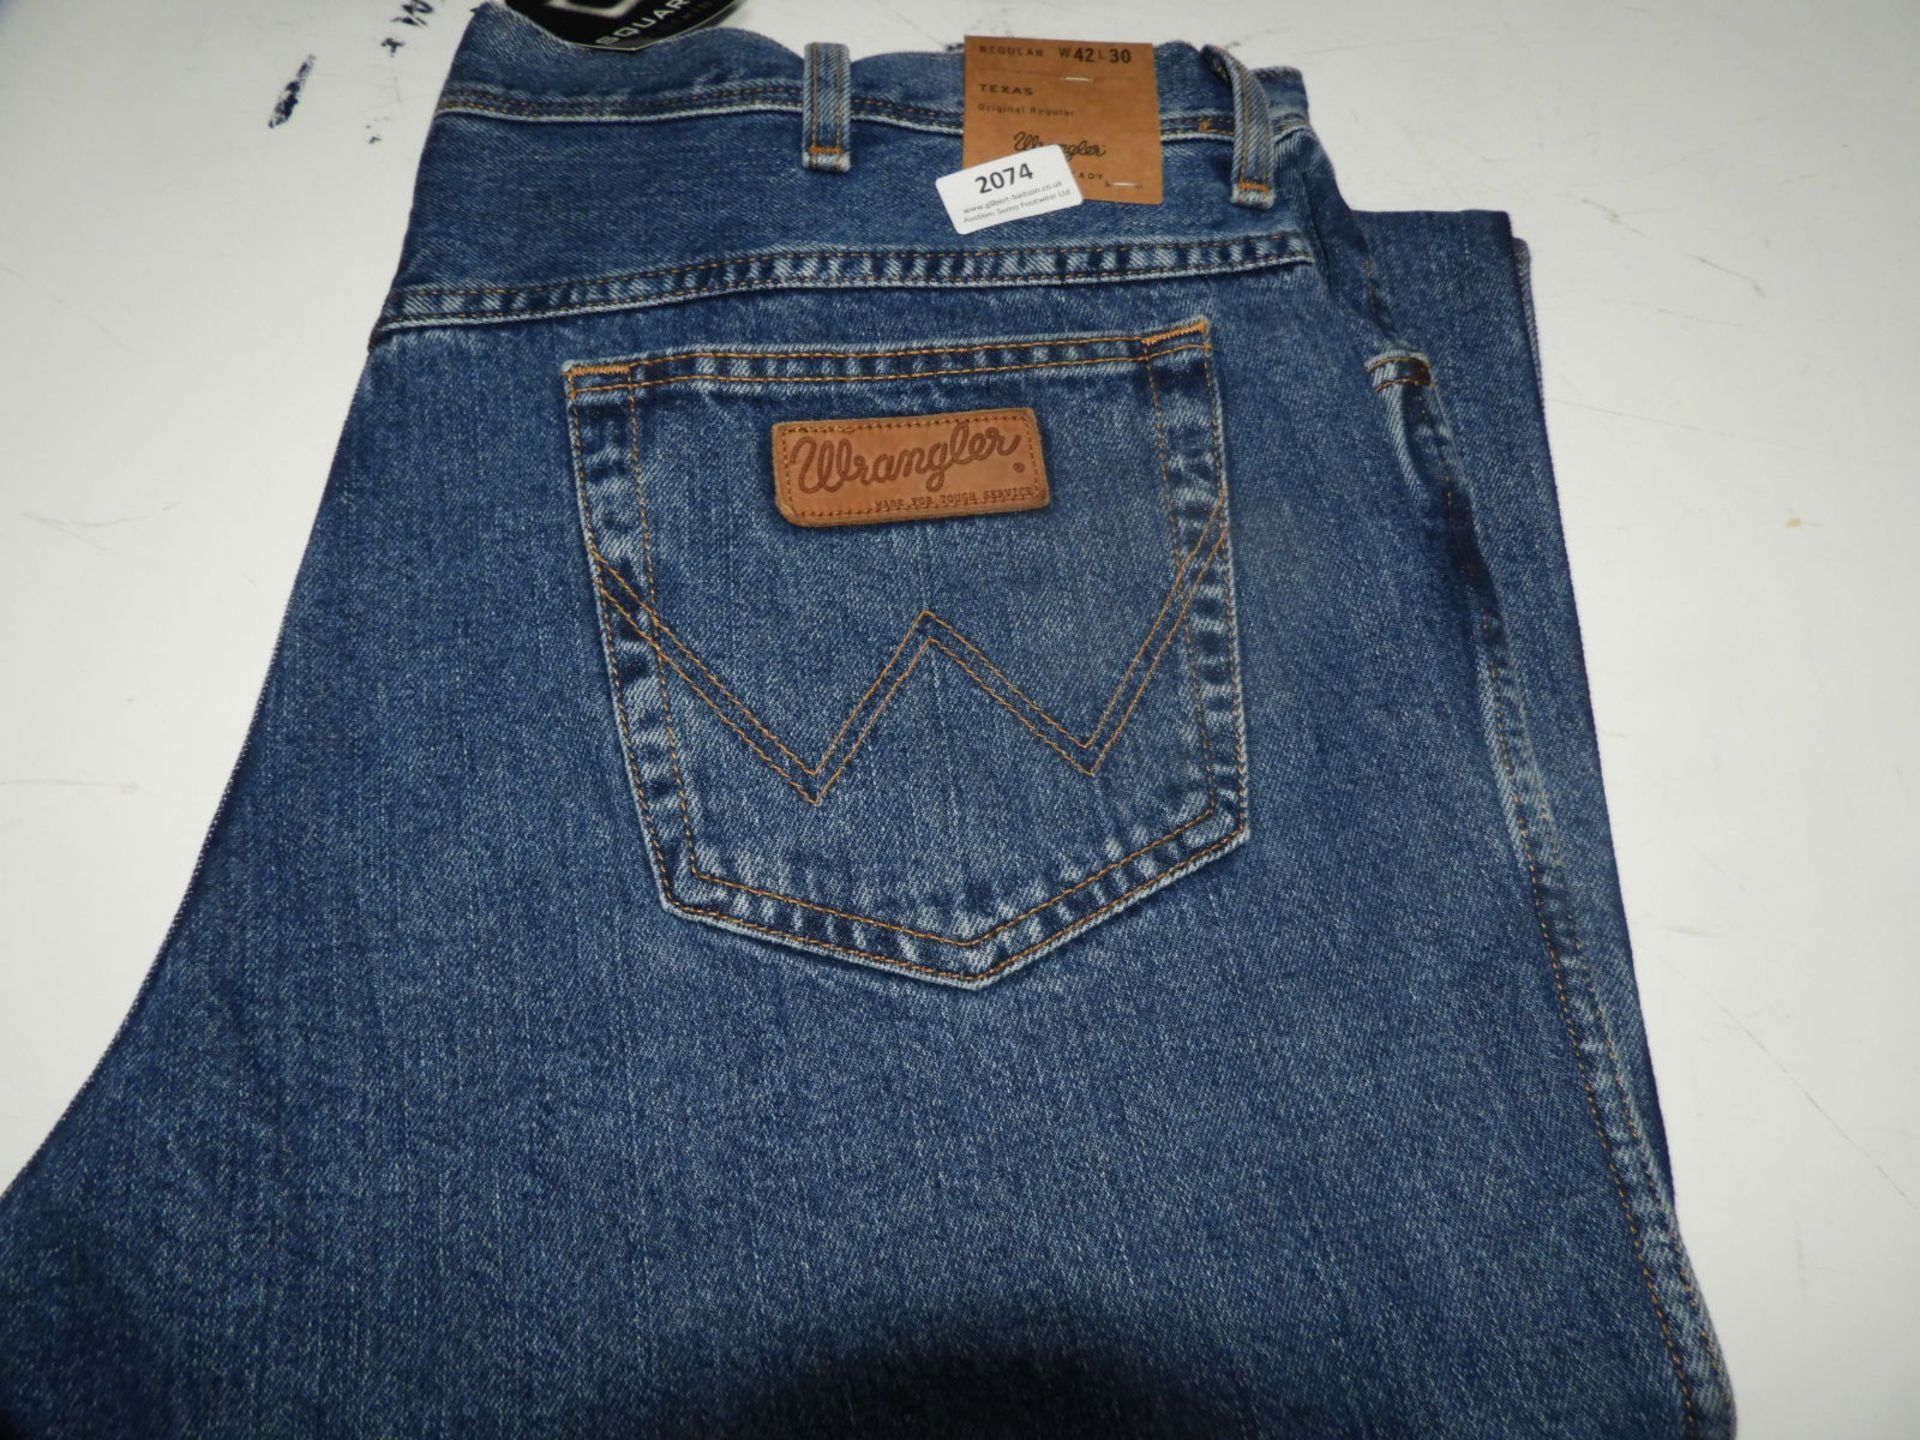 *Wrangler Texas Original Straight Denim Jeans Size